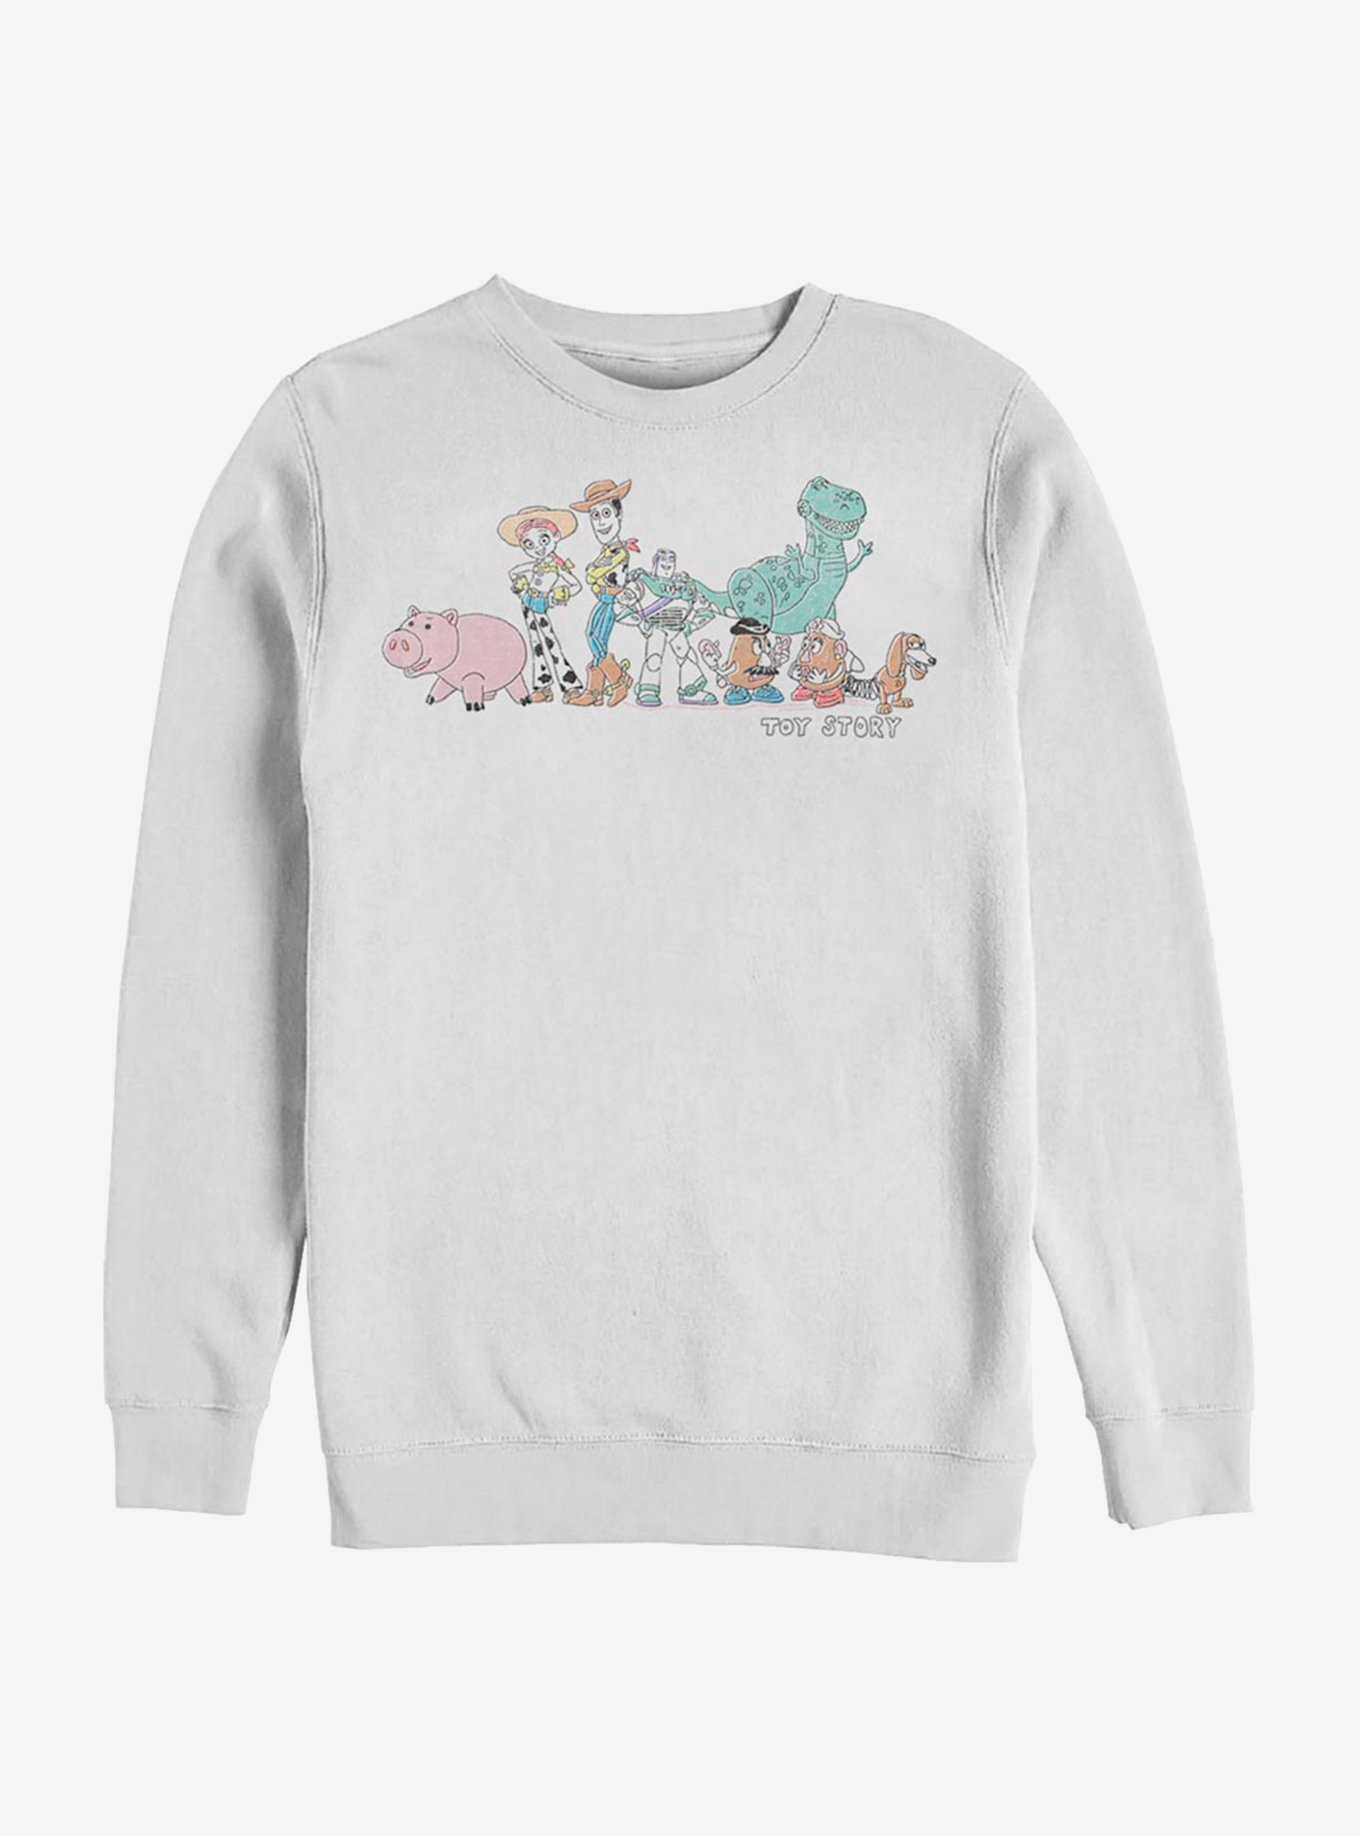 Disney Pixar Toy Story Line Up Sweatshirt, , hi-res